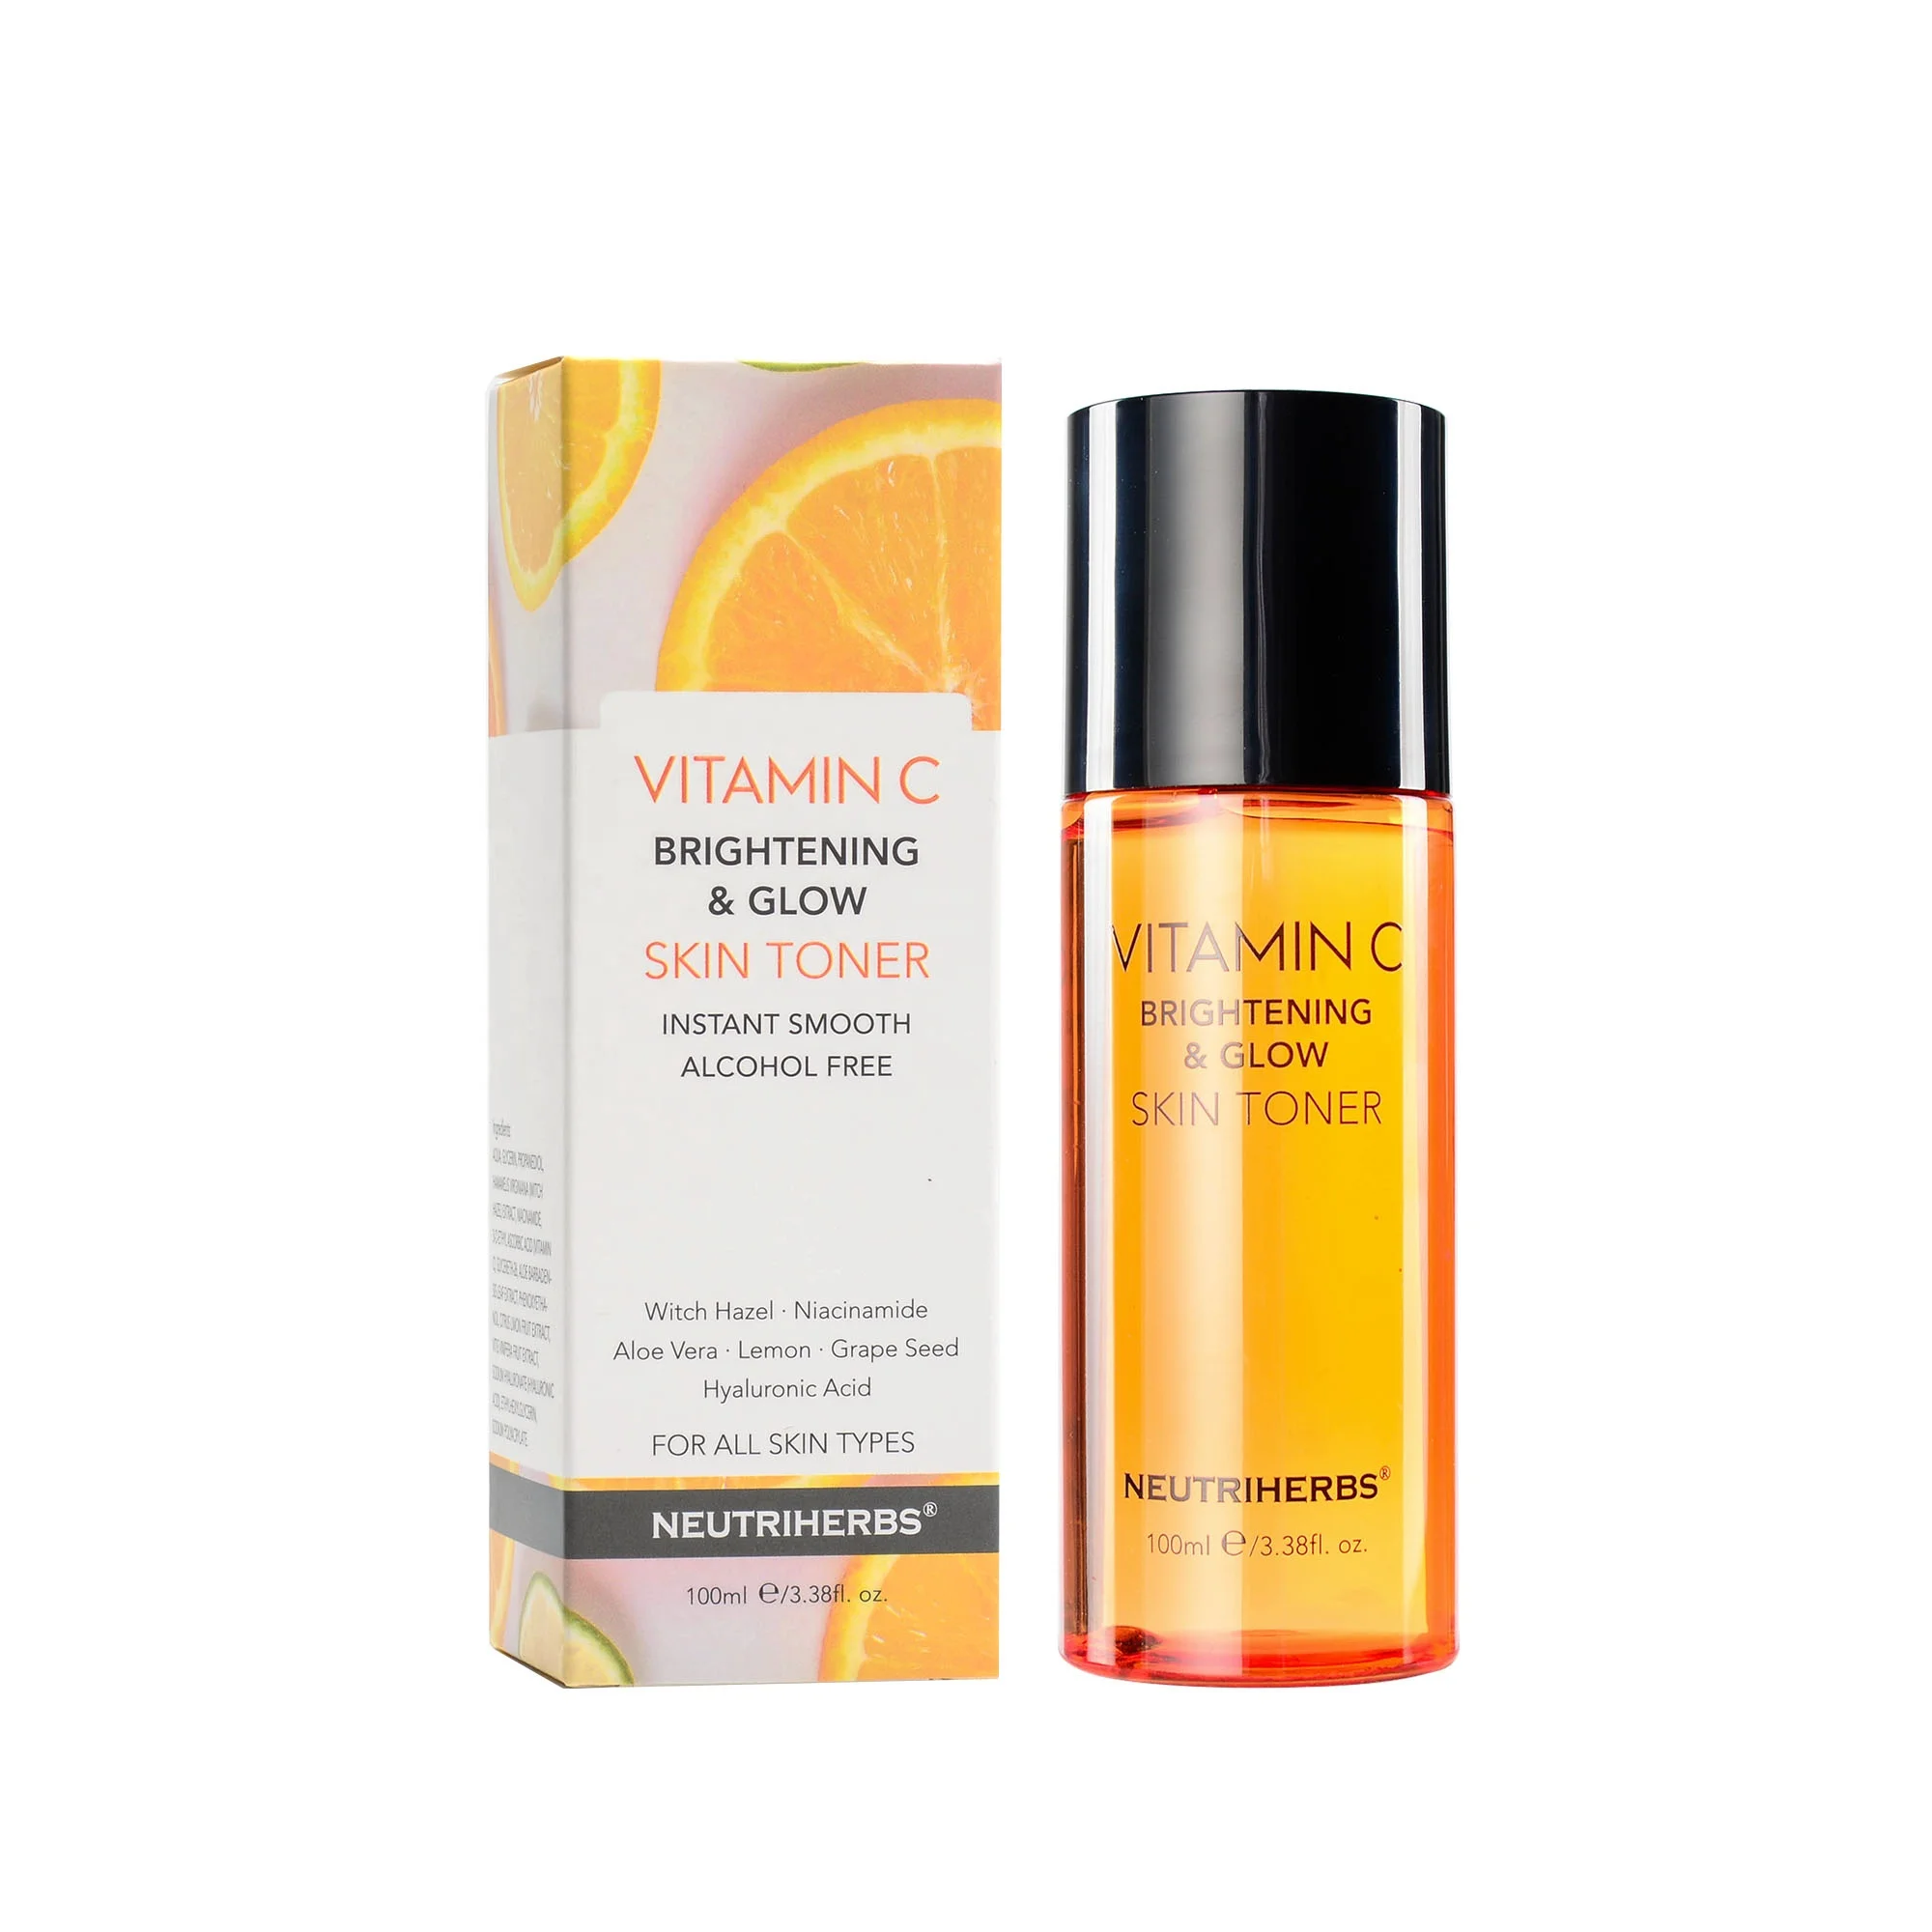 

Neutriherbs Organic Facial Skin Care Aloe Vera Hydrating Tightening Clean Pore Vitamin C Face Toner